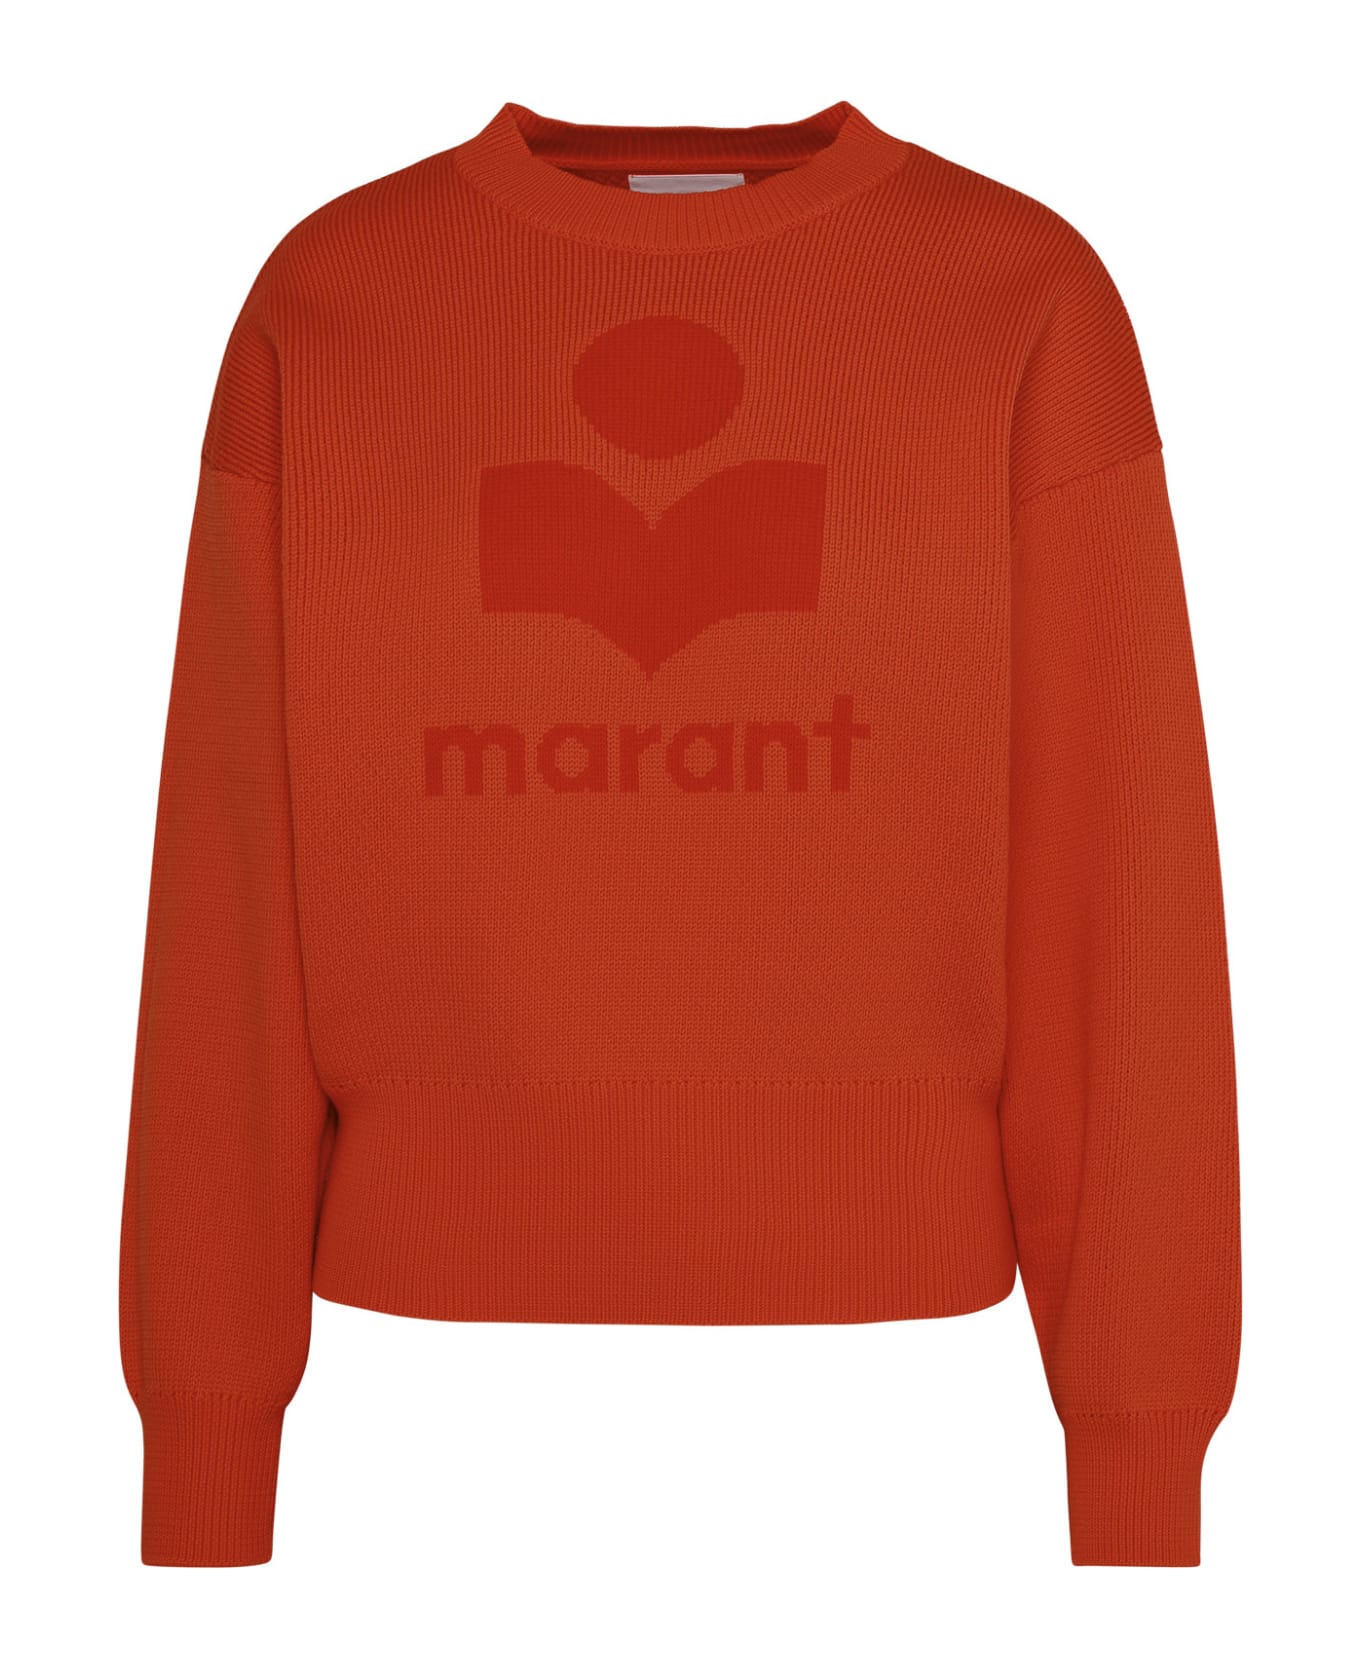 Marant Étoile Orange Cotton Blend 'ailys' Sweater - Orange